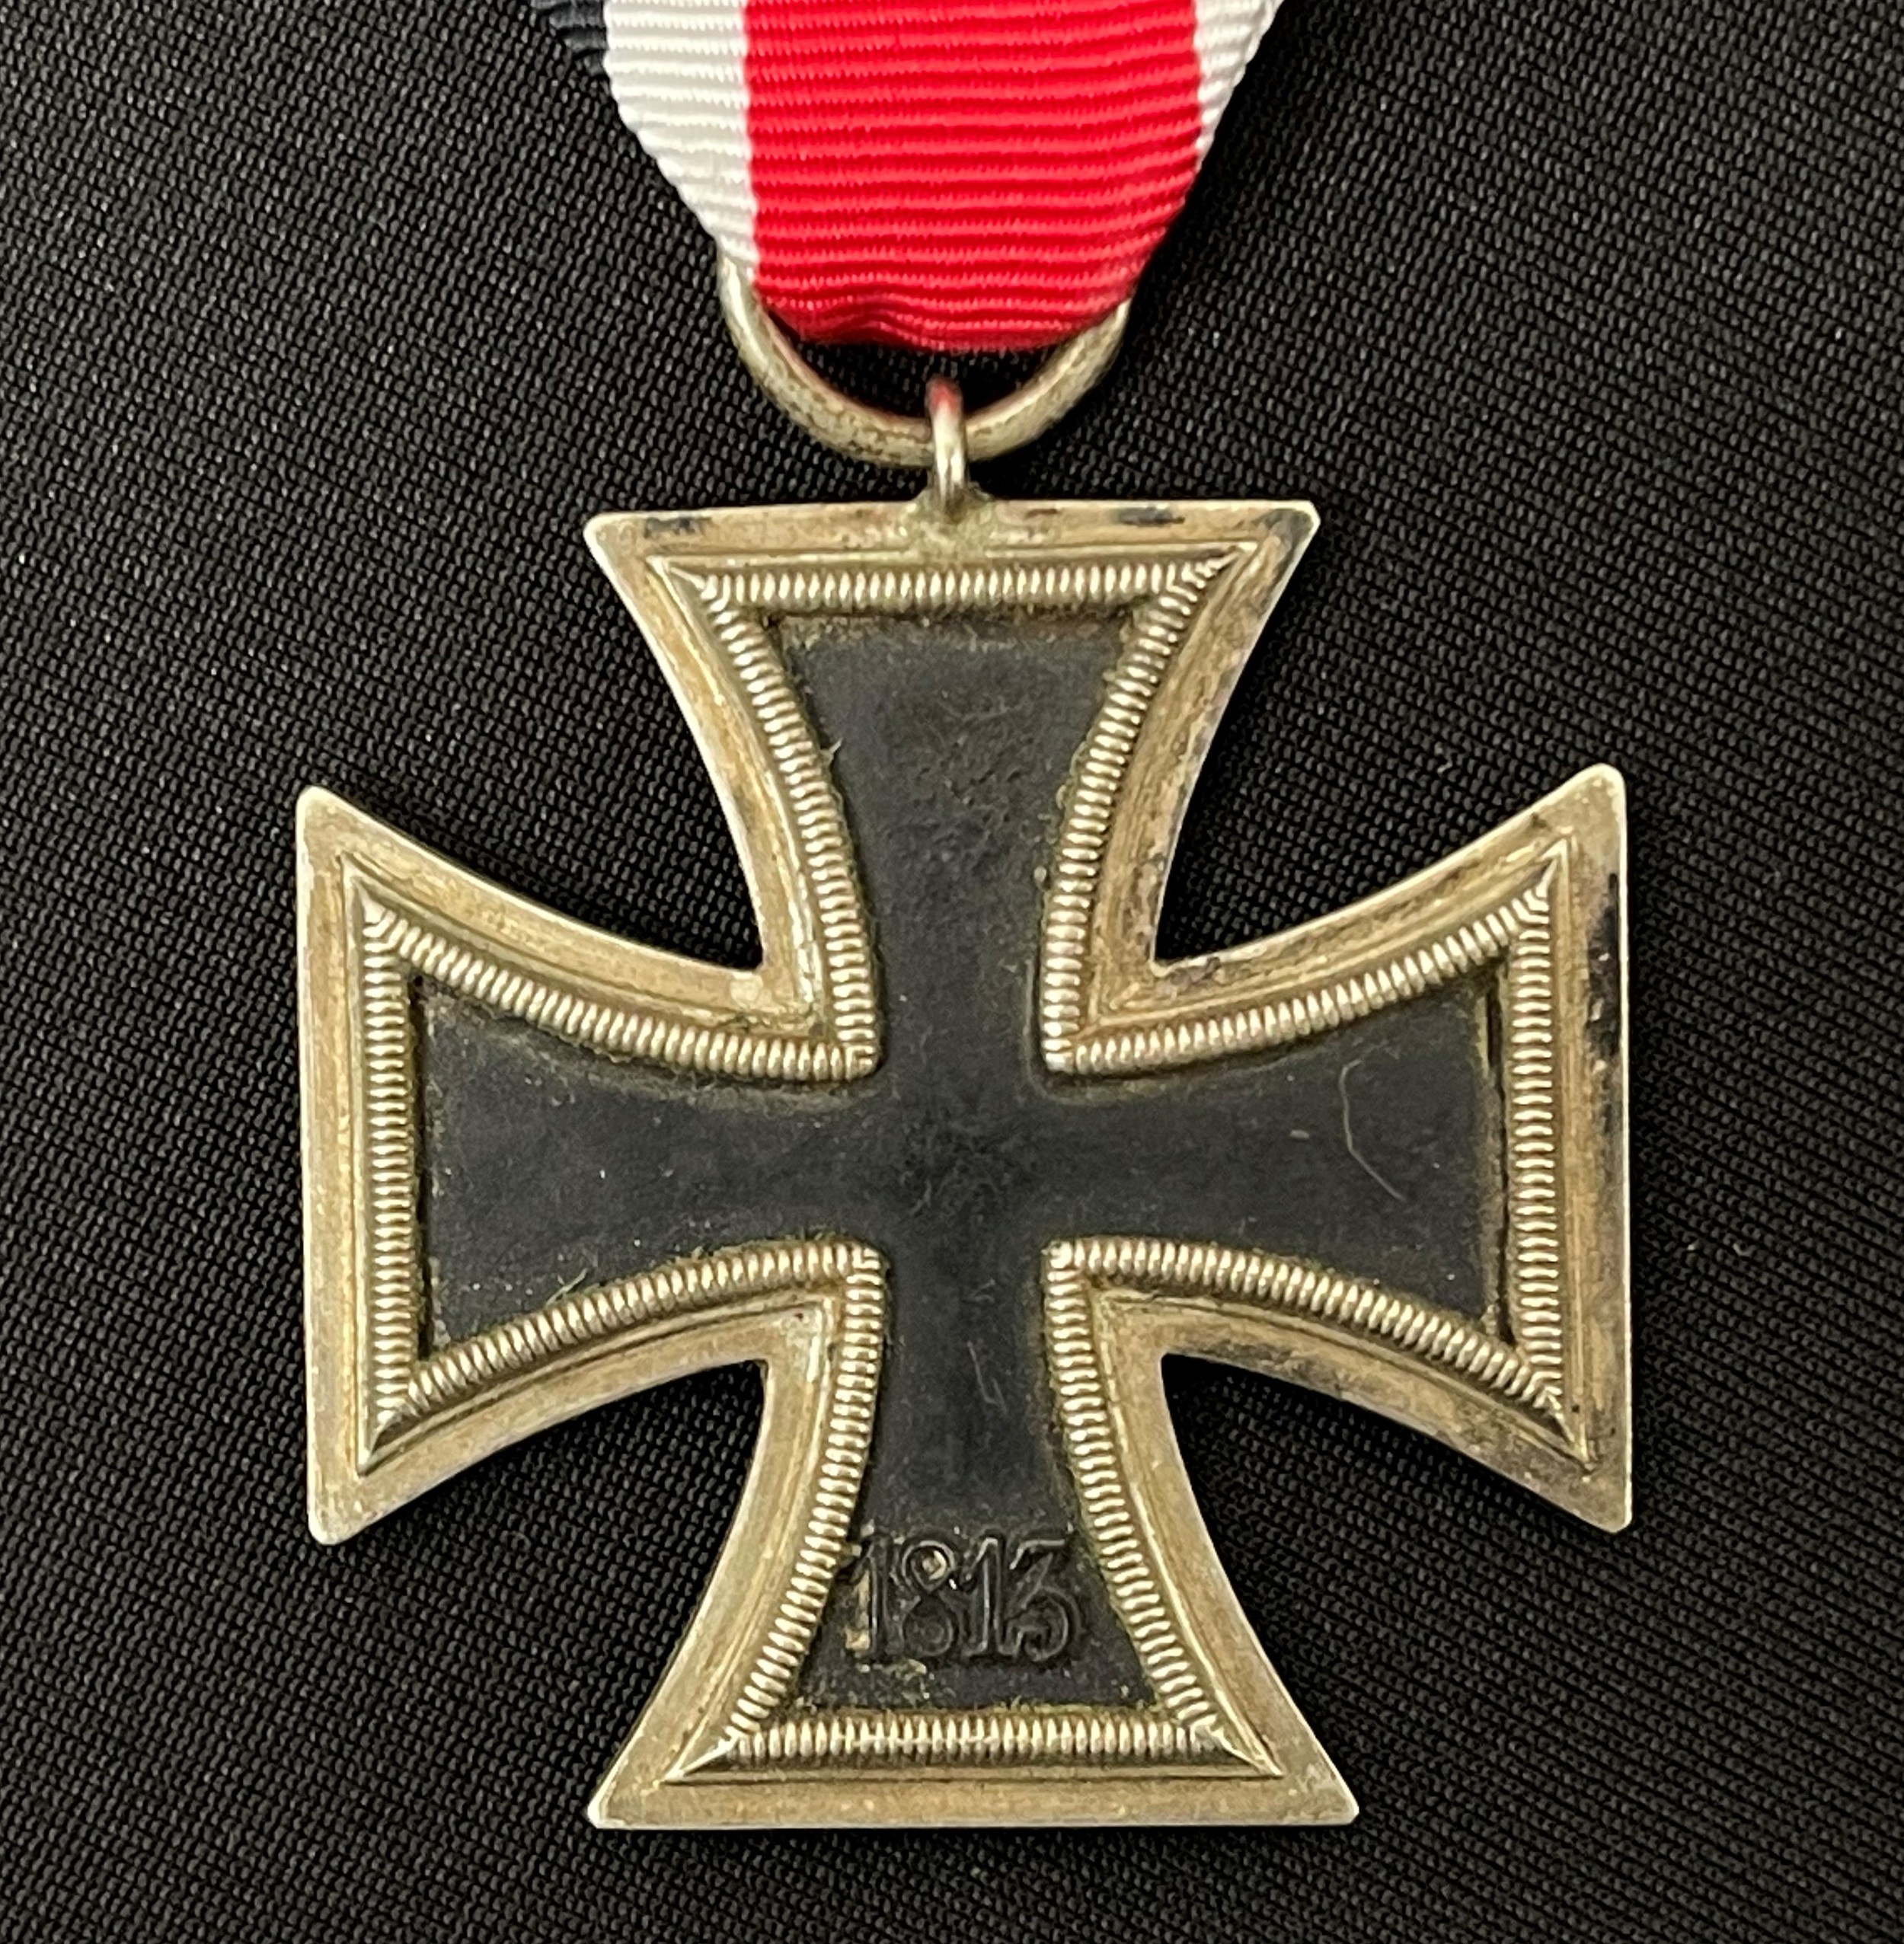 WW2 Third Reich Eisernes Kreuz 2. Klasse. Iron Cross 2nd class 1939. Ring is maker marked "40". - Image 2 of 3